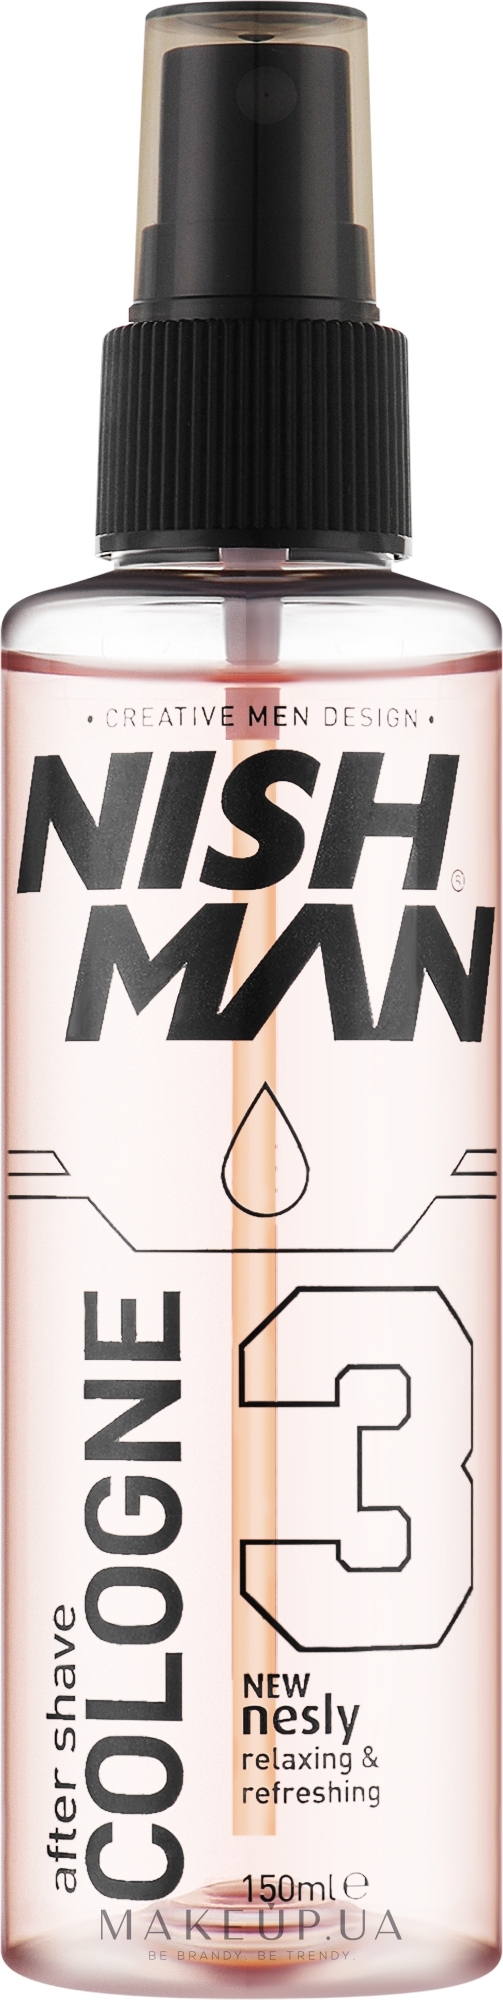 Одеколон после бритья - Nishman New Nesly Cologne №3 — фото 150ml